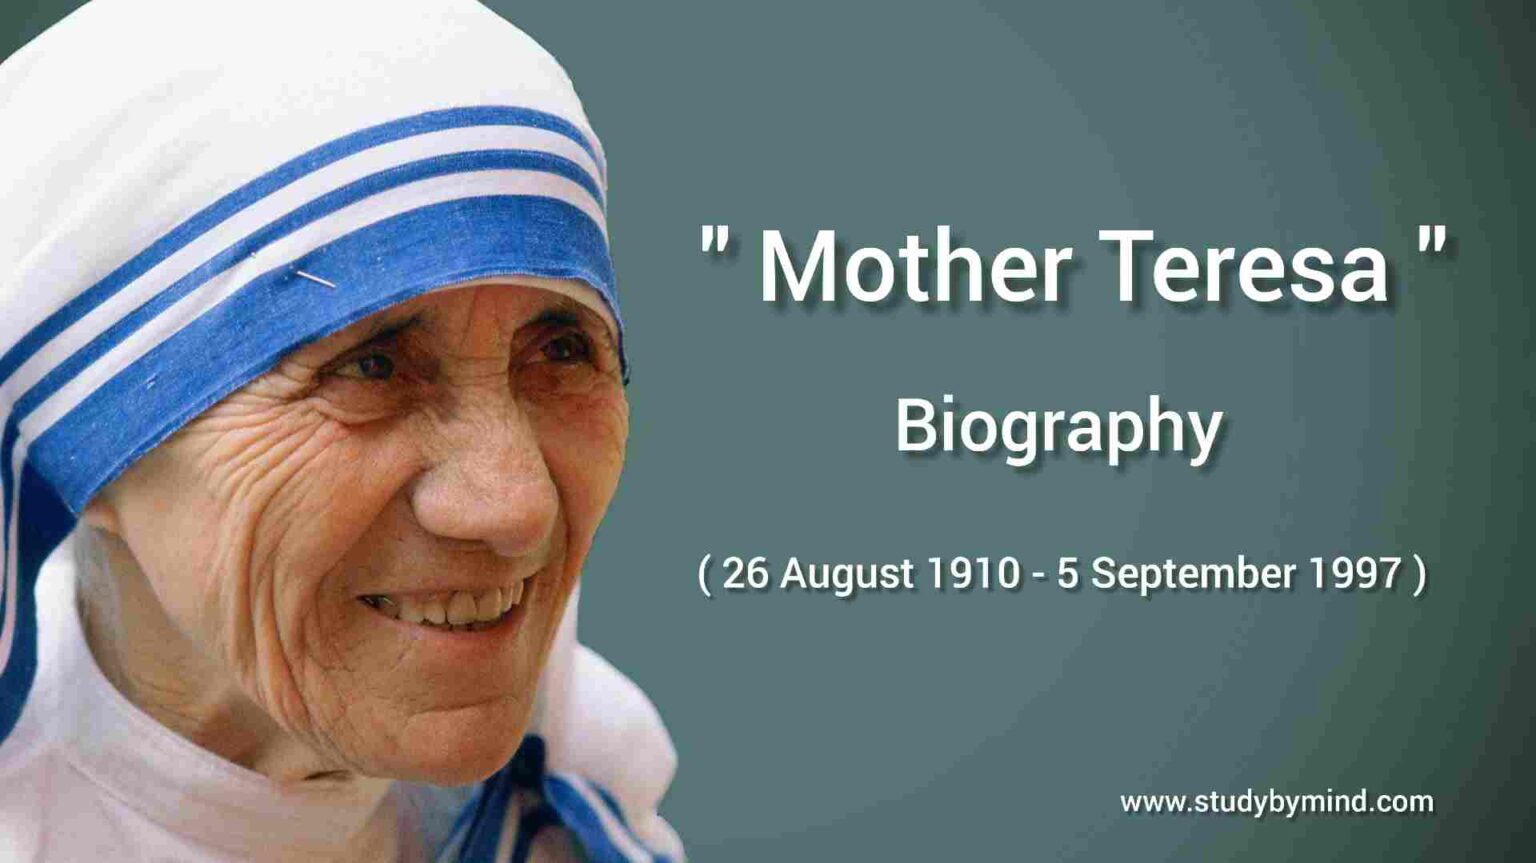 write a short biography of mother teresa